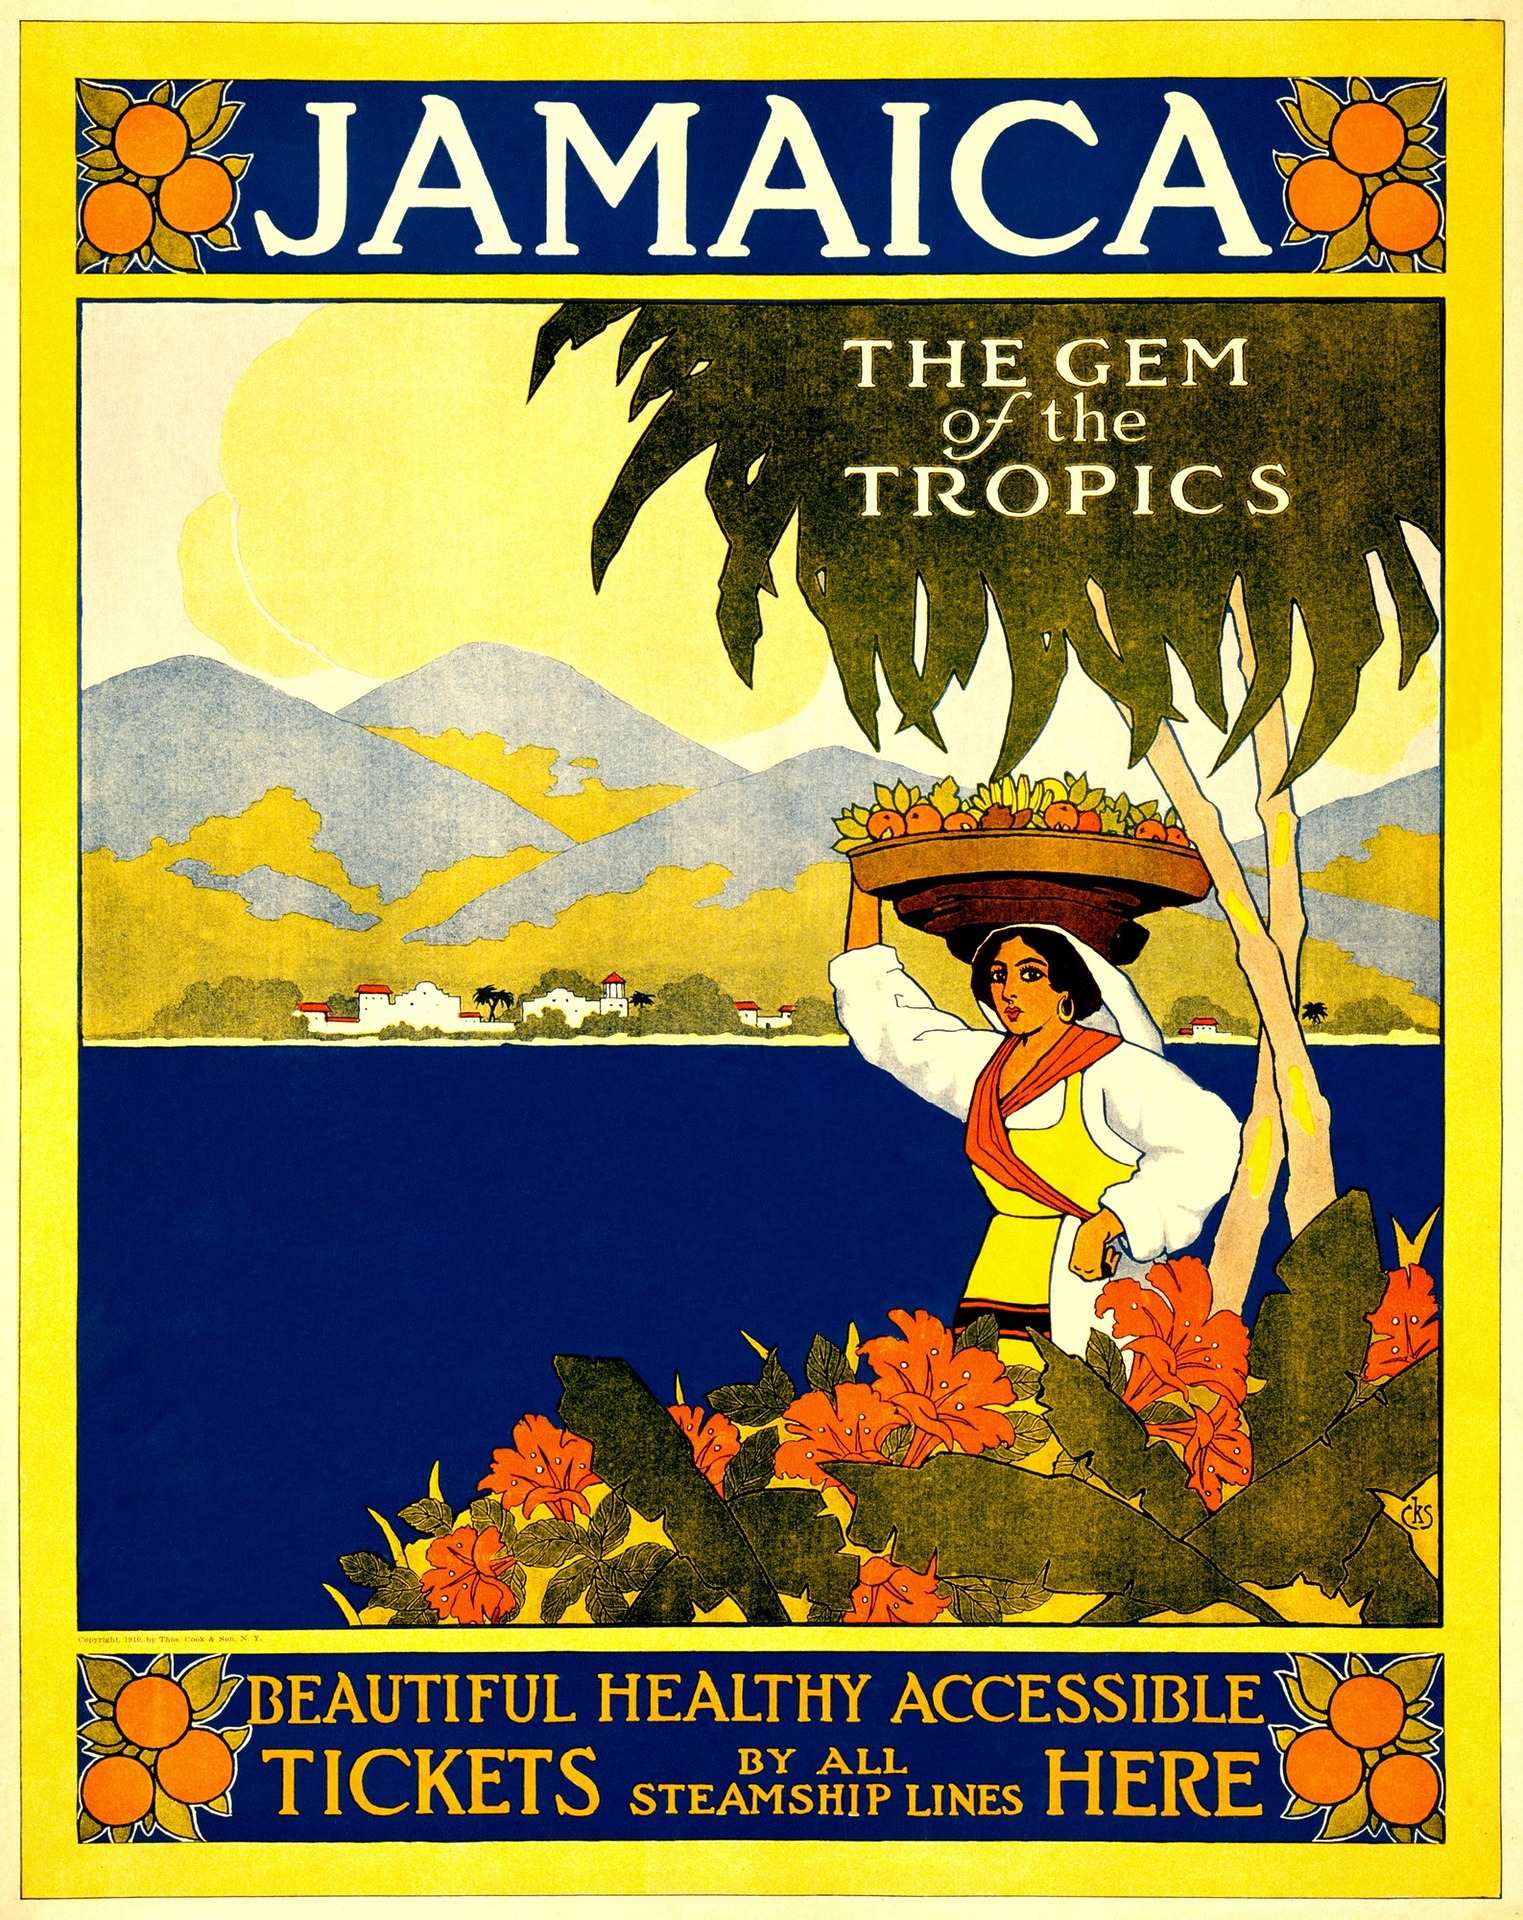 Jamaica poster